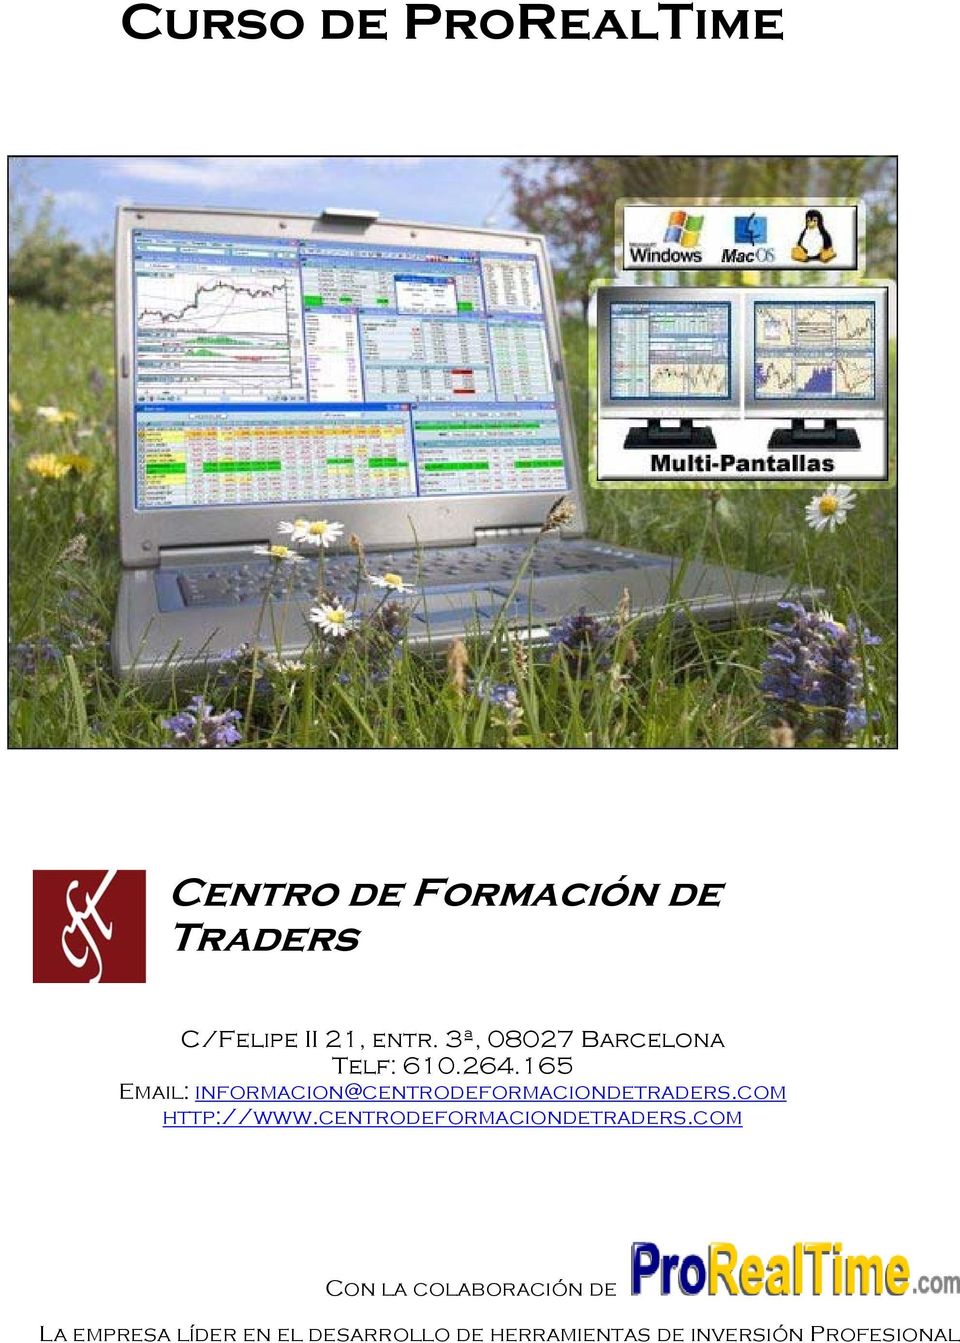 165 Email: informacion@centrodeformaciondetraders.